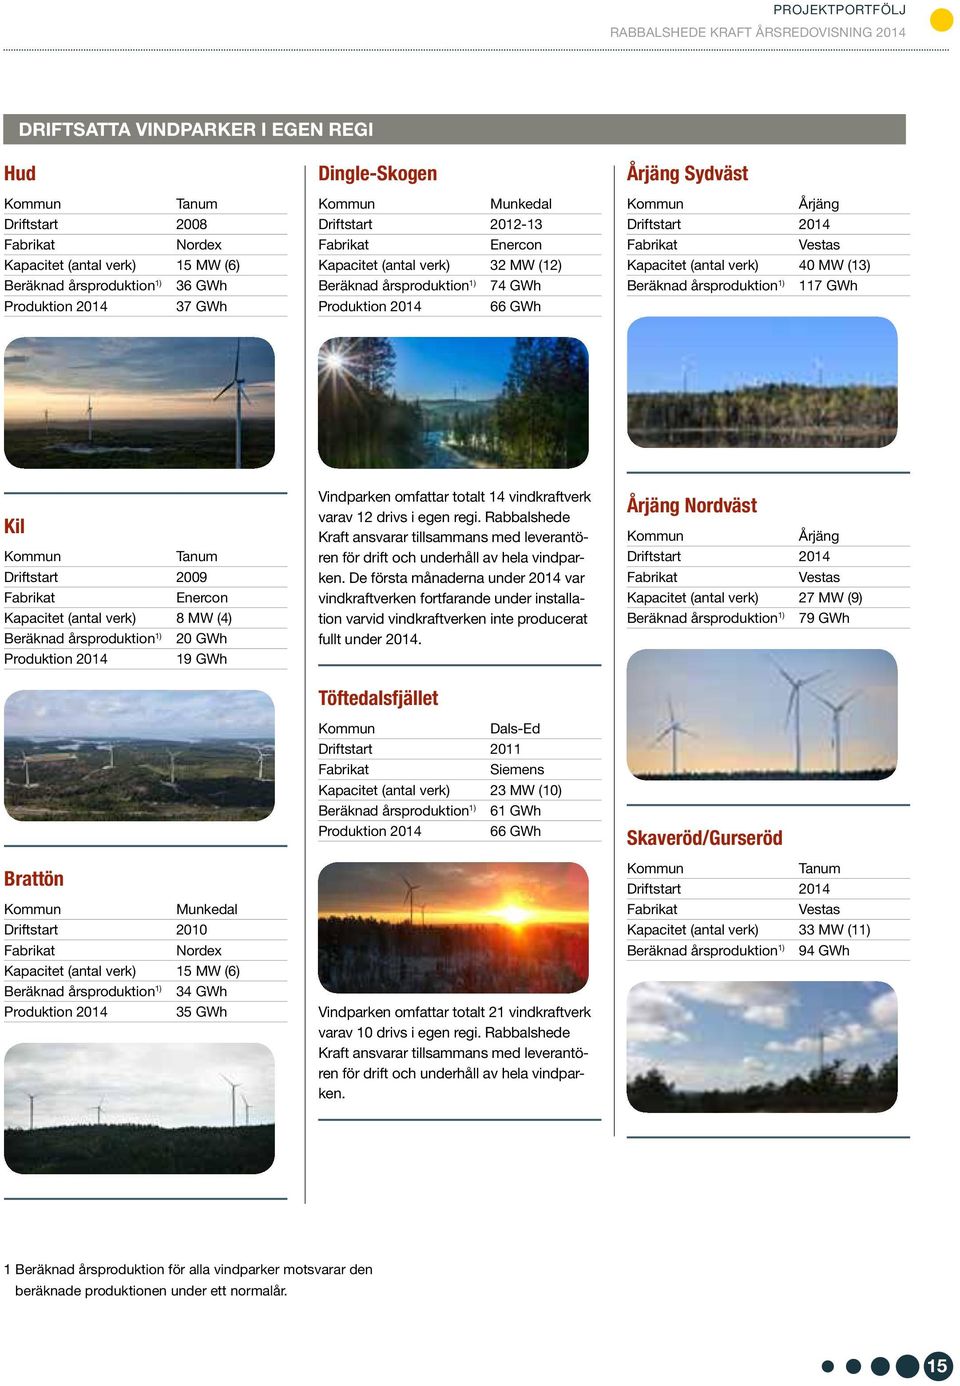 2014 Fabrikat Vestas Kapacitet (antal verk) 40 MW (13) Beräknad årsproduktion 1) 117 GWh Kil Kommun Tanum Driftstart 2009 Fabrikat Enercon Kapacitet (antal verk) 8 MW (4) Beräknad årsproduktion 1) 20